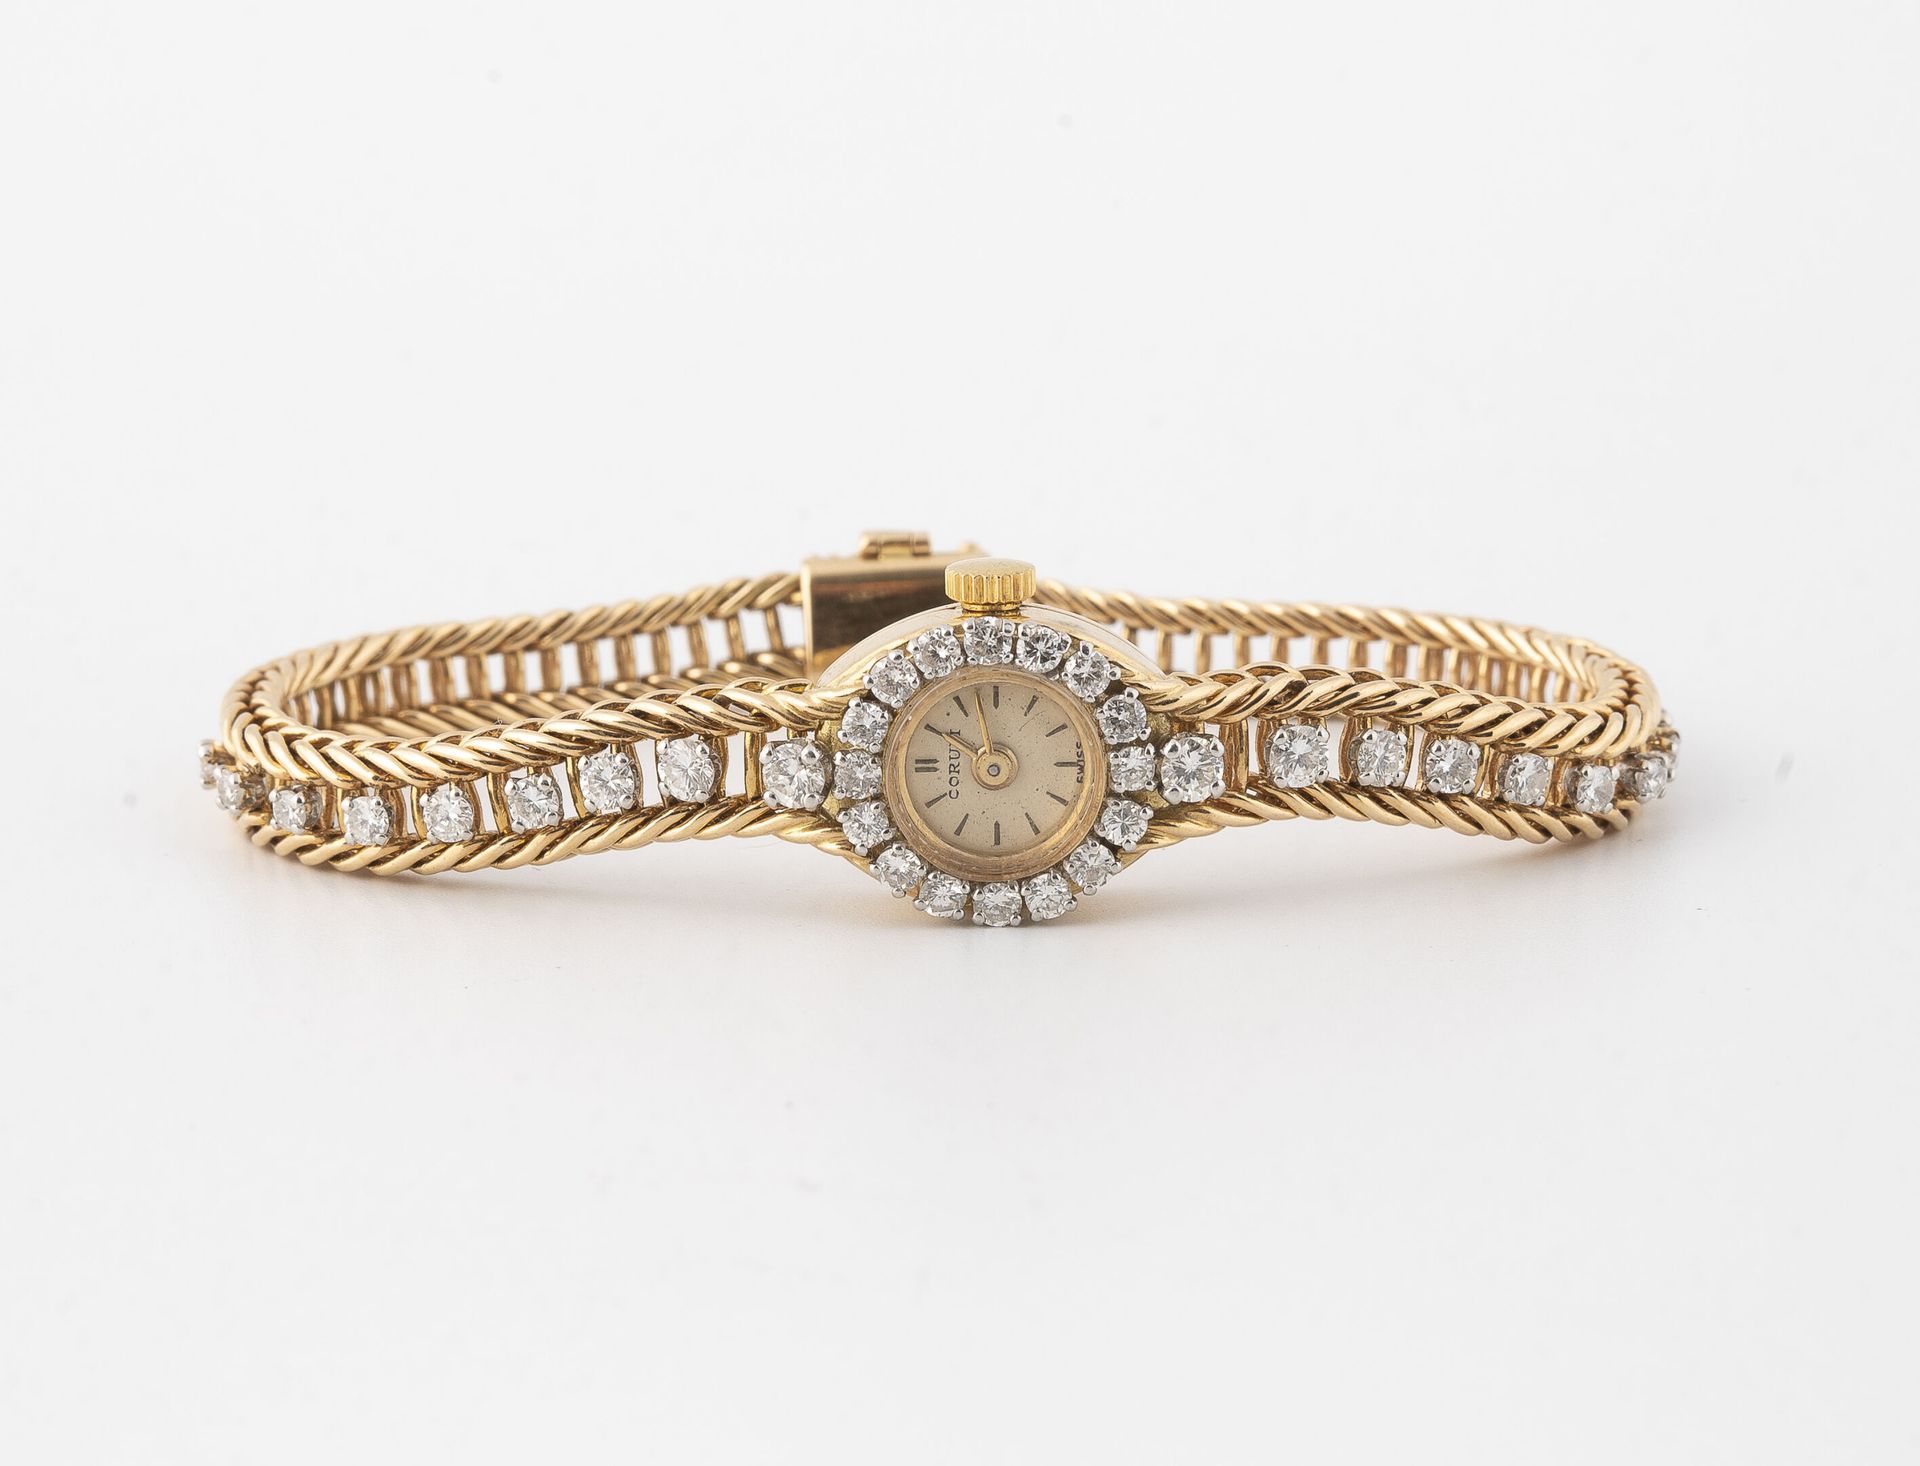 CORUM Montre bracelet de dame en or jaune (750) et platine (950).

Boîtier rond,&hellip;